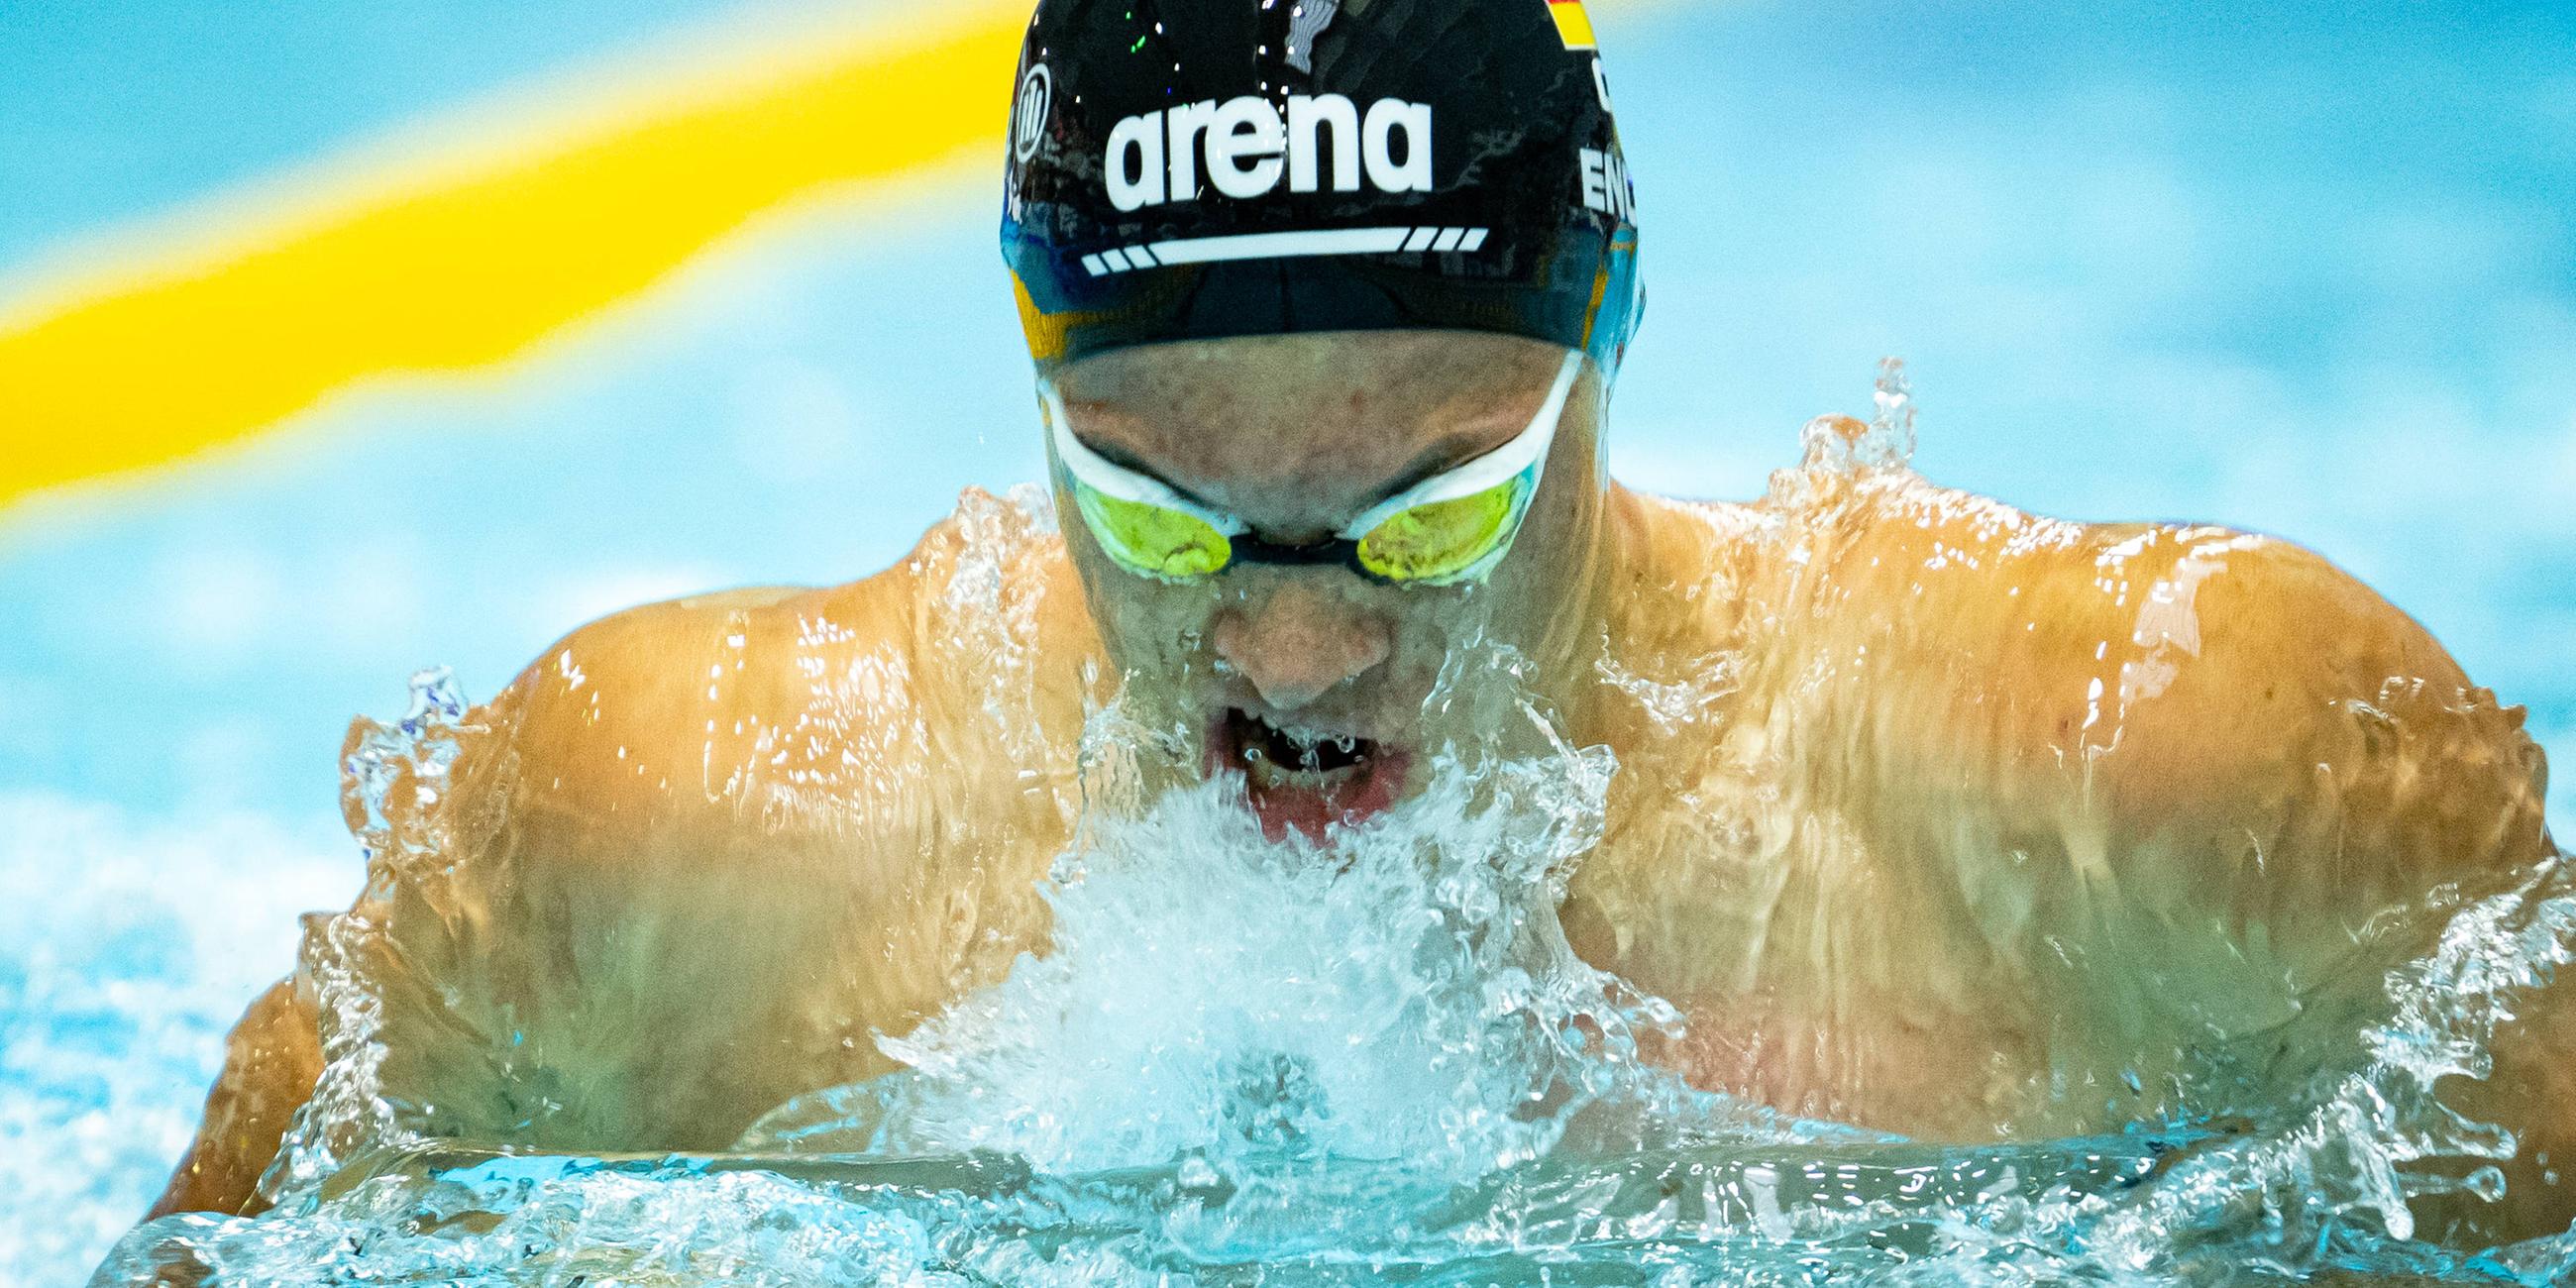 Paraschwimmer Taliso Engel